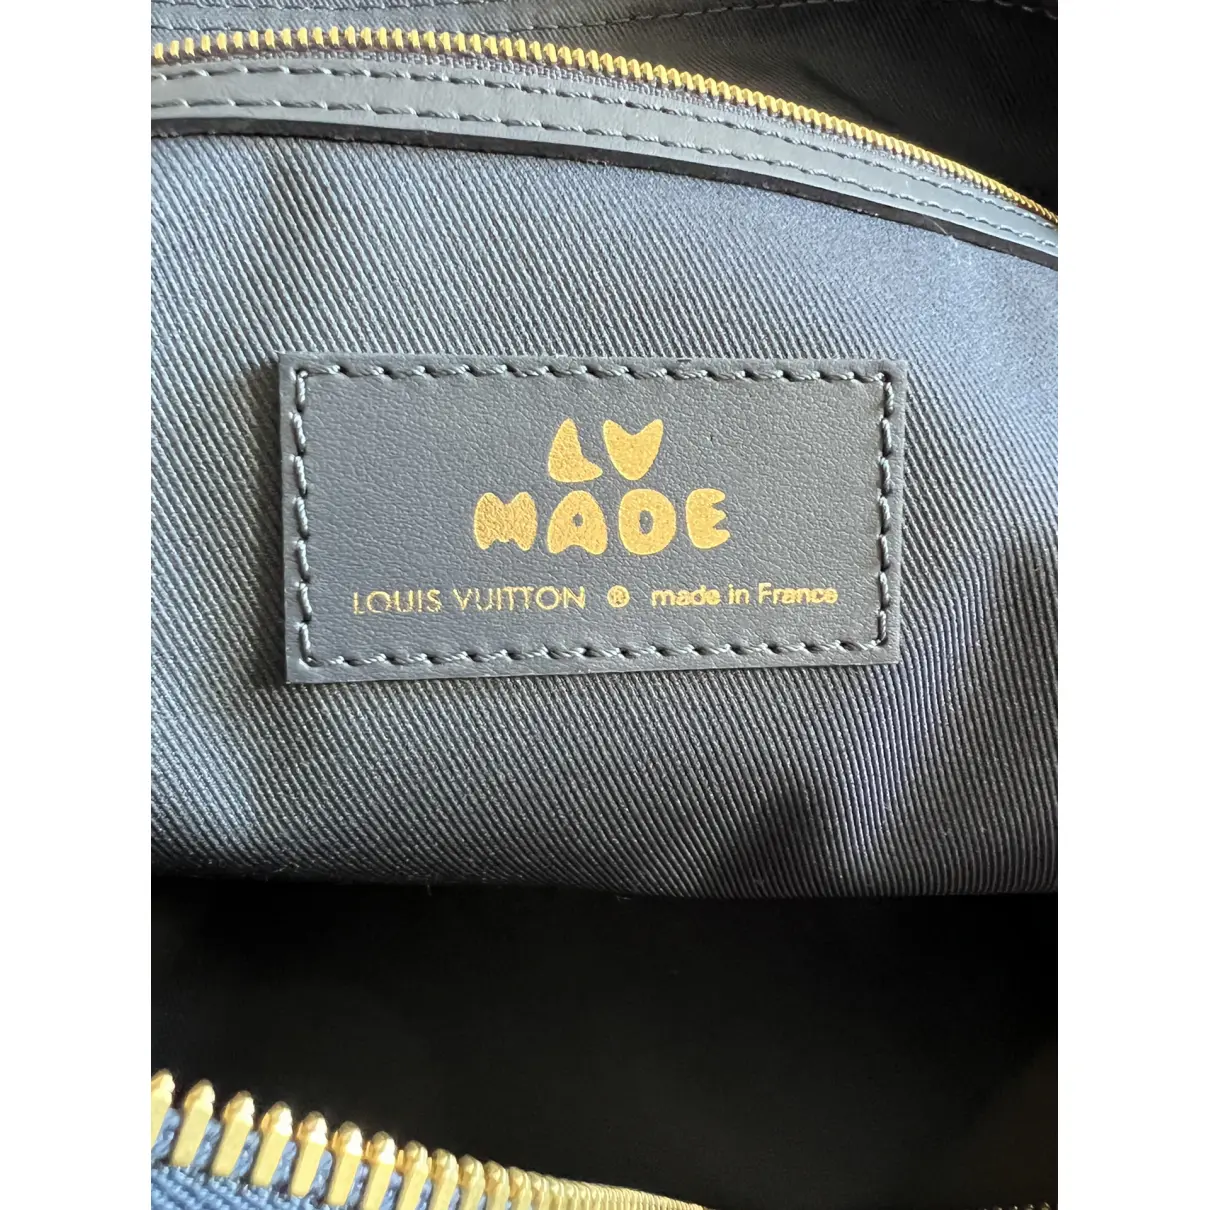 Buy Louis Vuitton x Nigo Leather weekend bag online